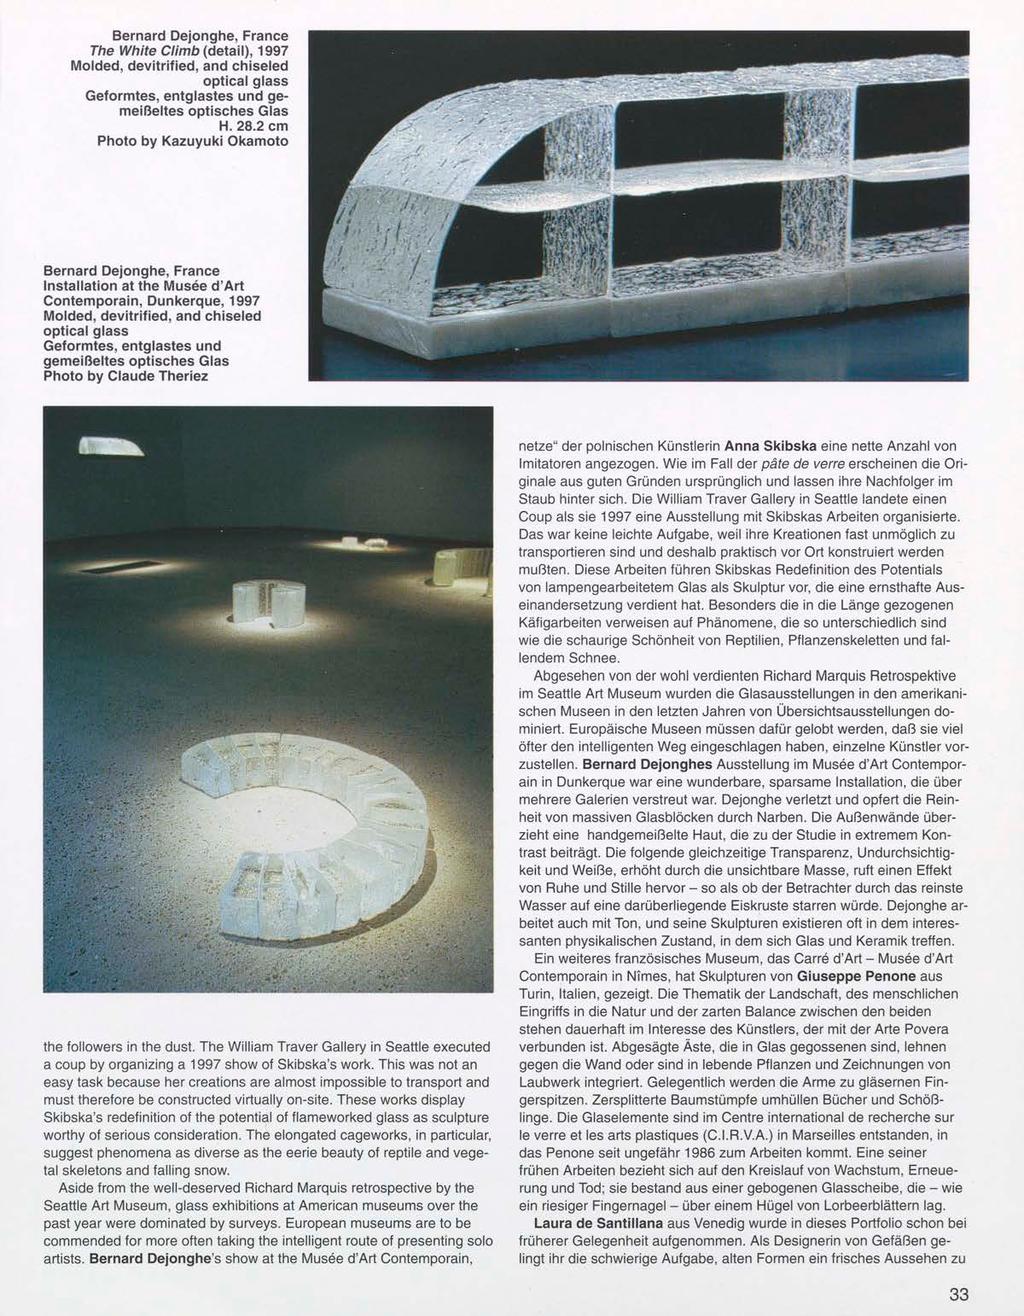 Bernard Dejonghe, France The White Climb (detail), 1997 Molded, devitrified, and chiseled optical glass Geformtes, entglastes und gemeifteltes optisches Glas H. 28.